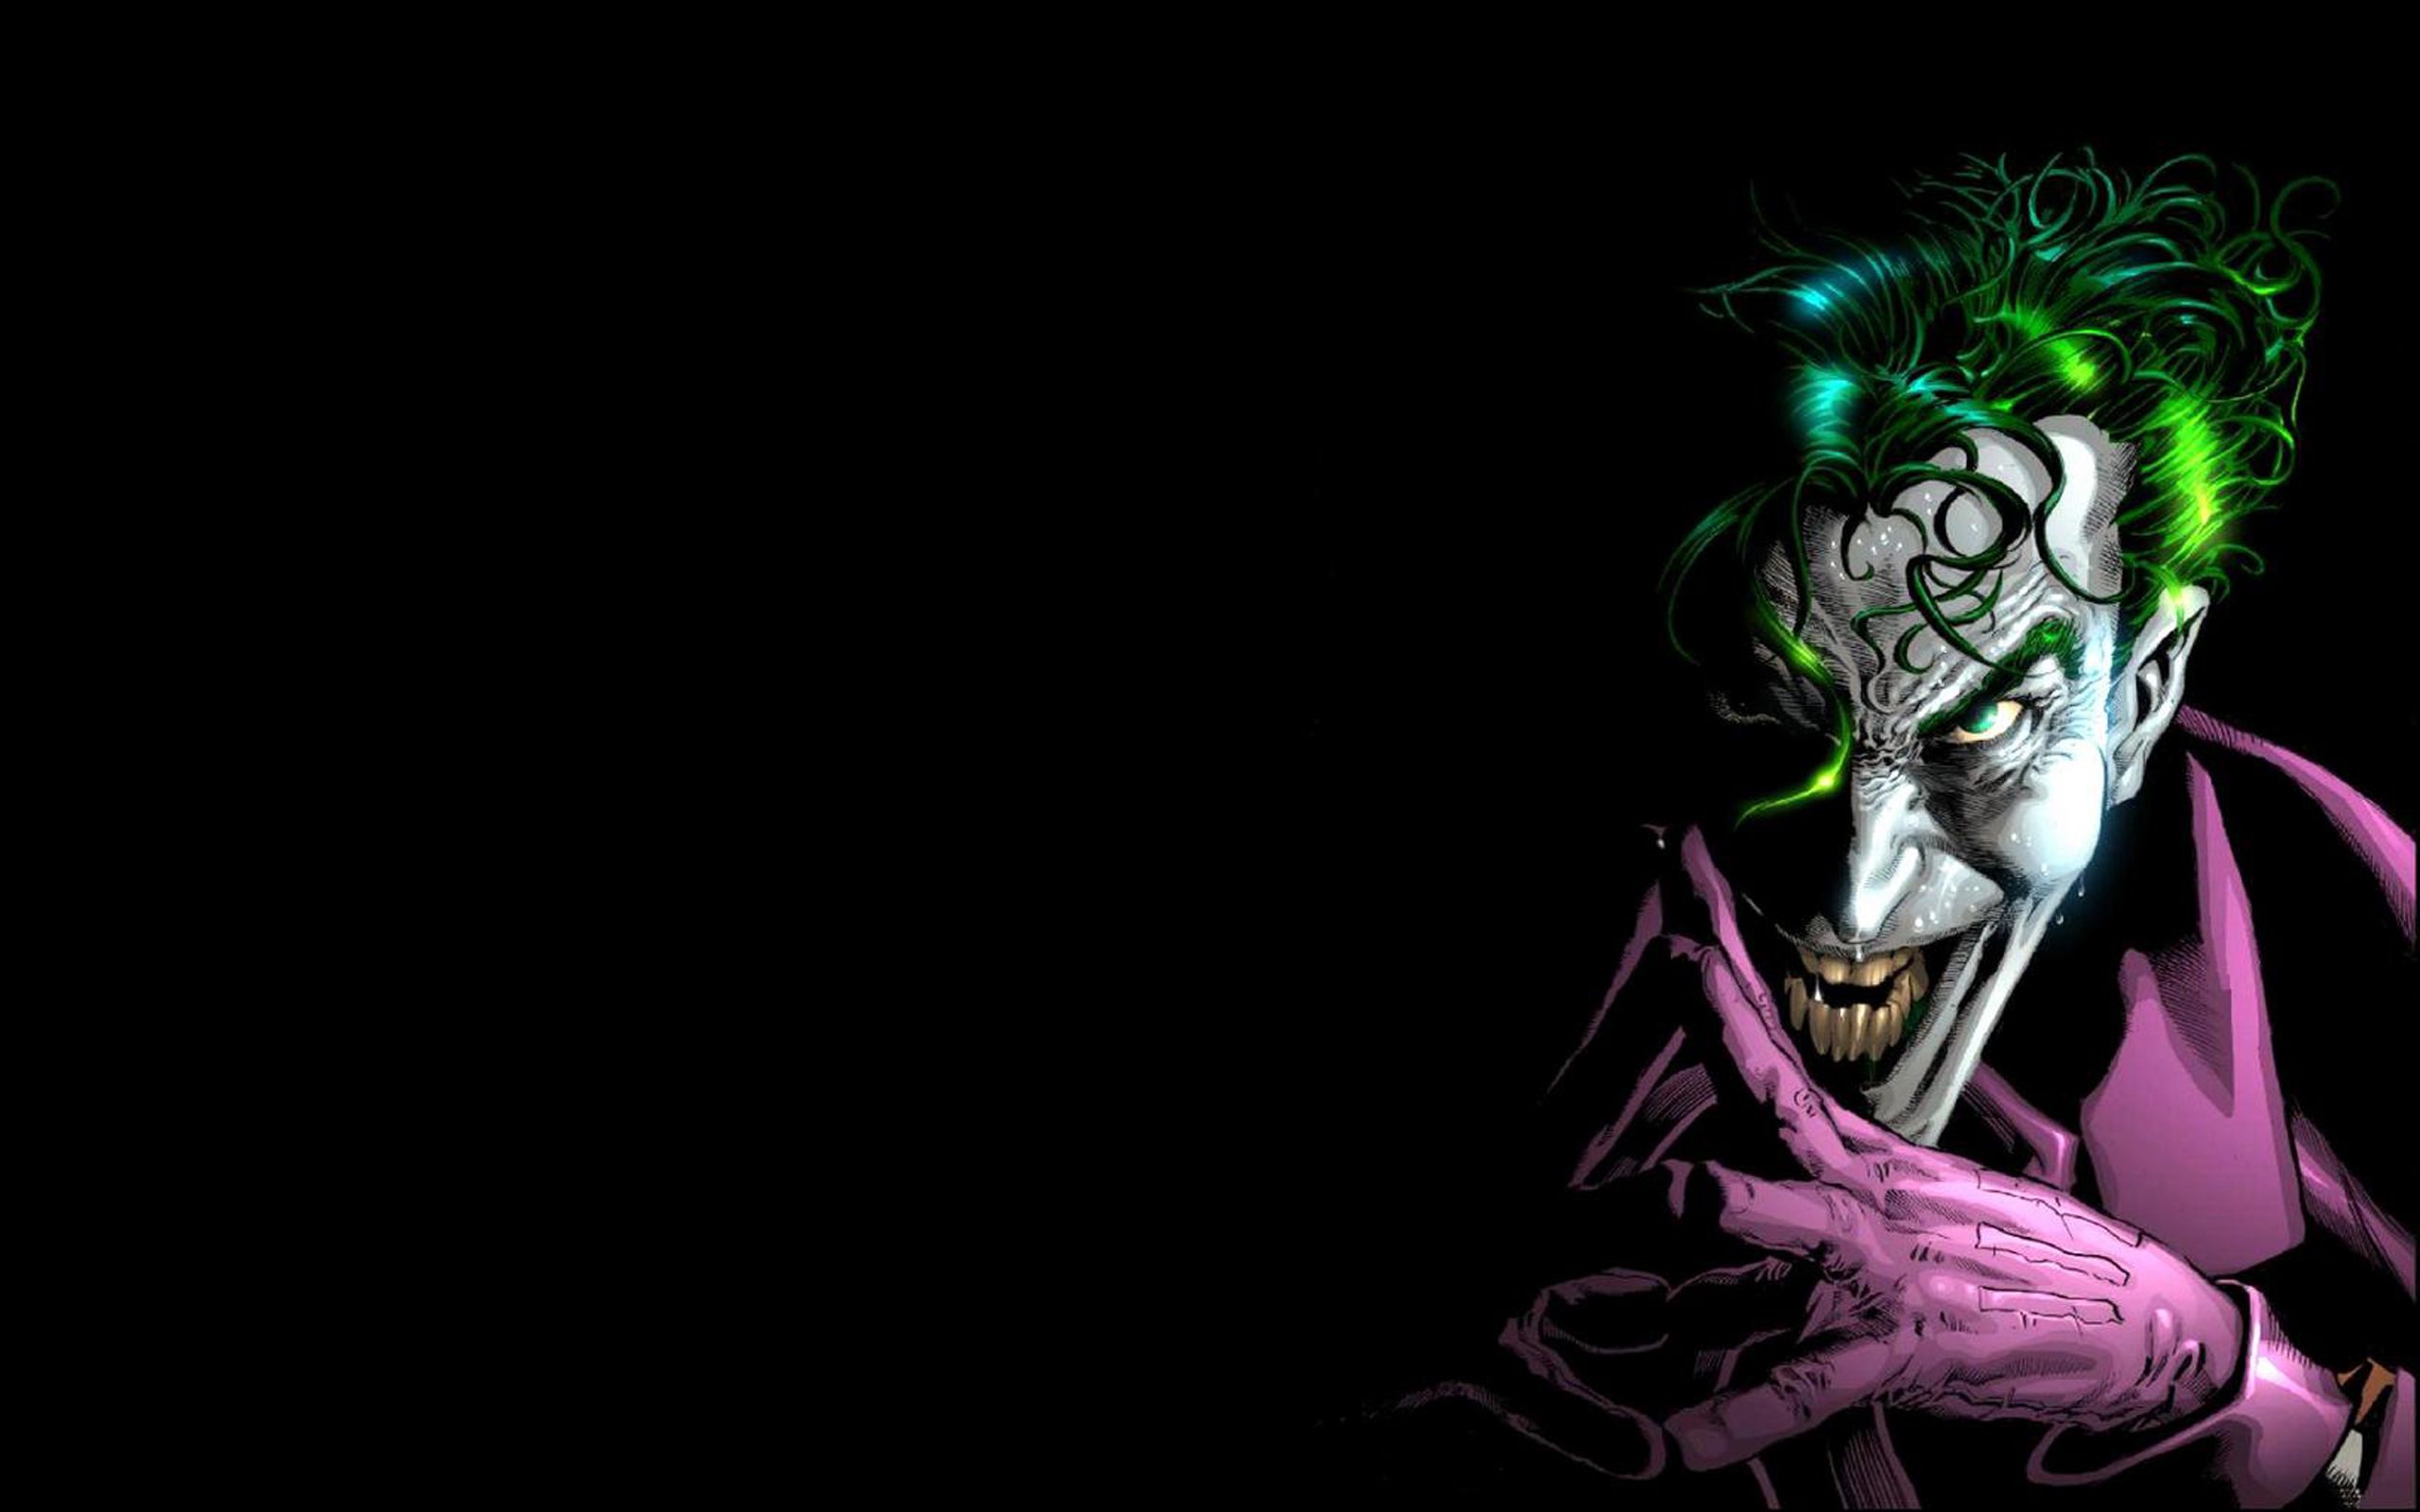 Joker Wallpaper For Pc 2560x1600, Wallpaper13.com